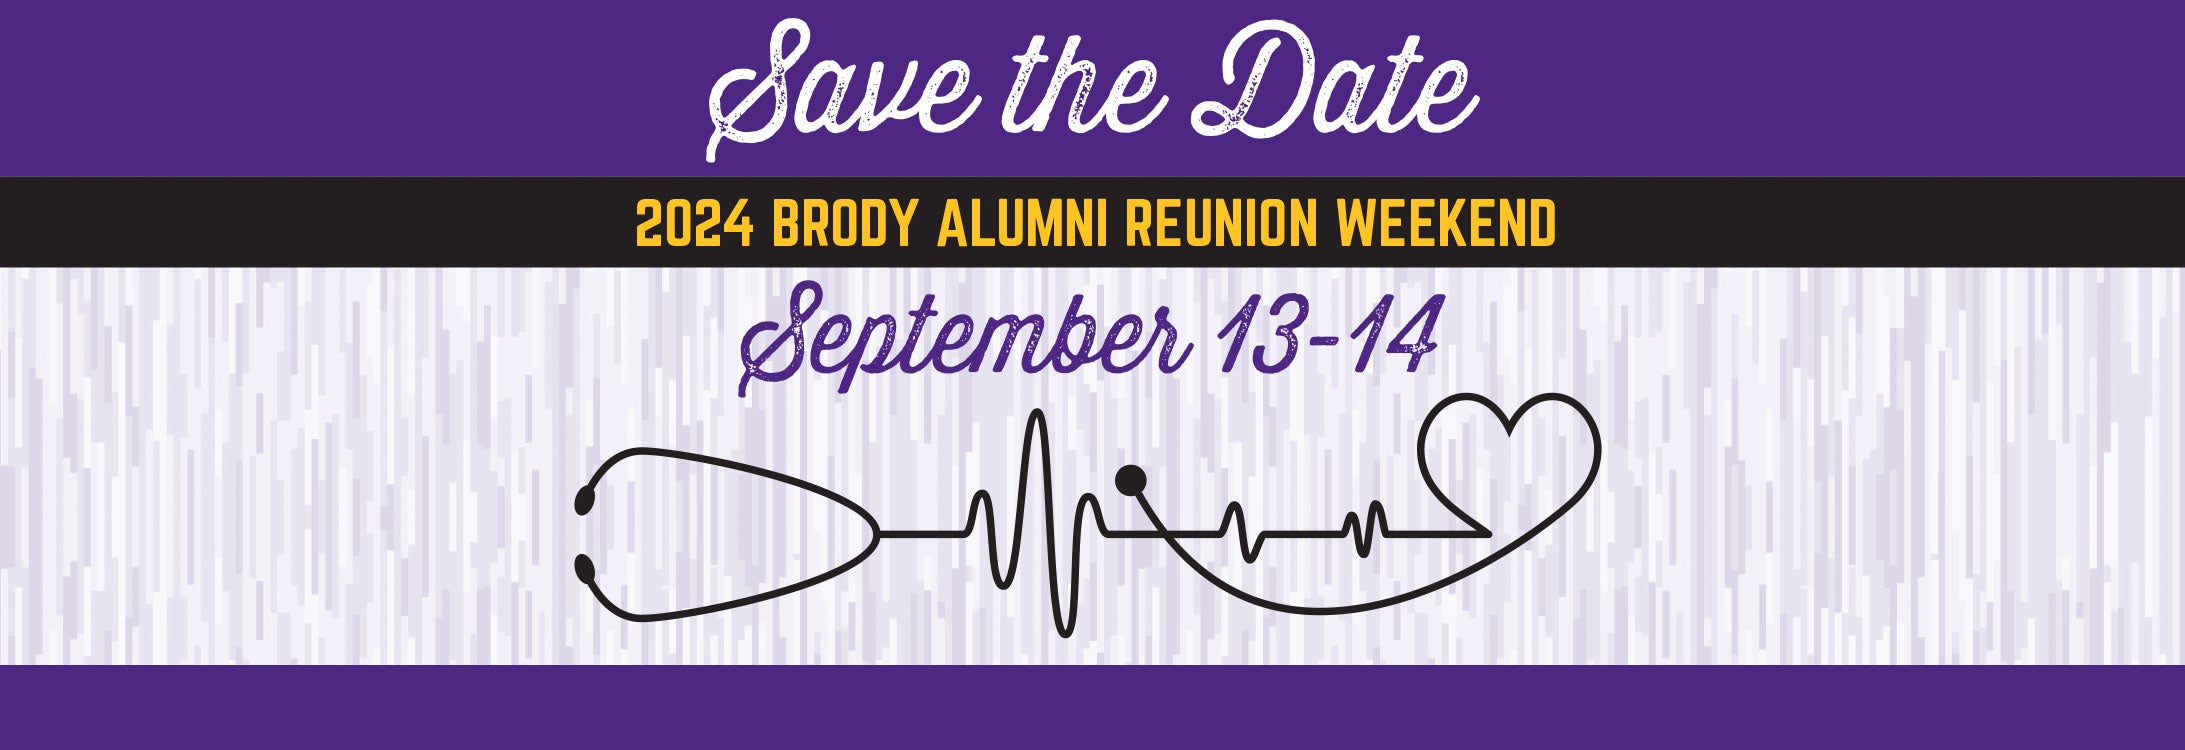 Save the Date. 2024 Brody Alumni Reunion Weekend. September thirteenth to fourteenth.